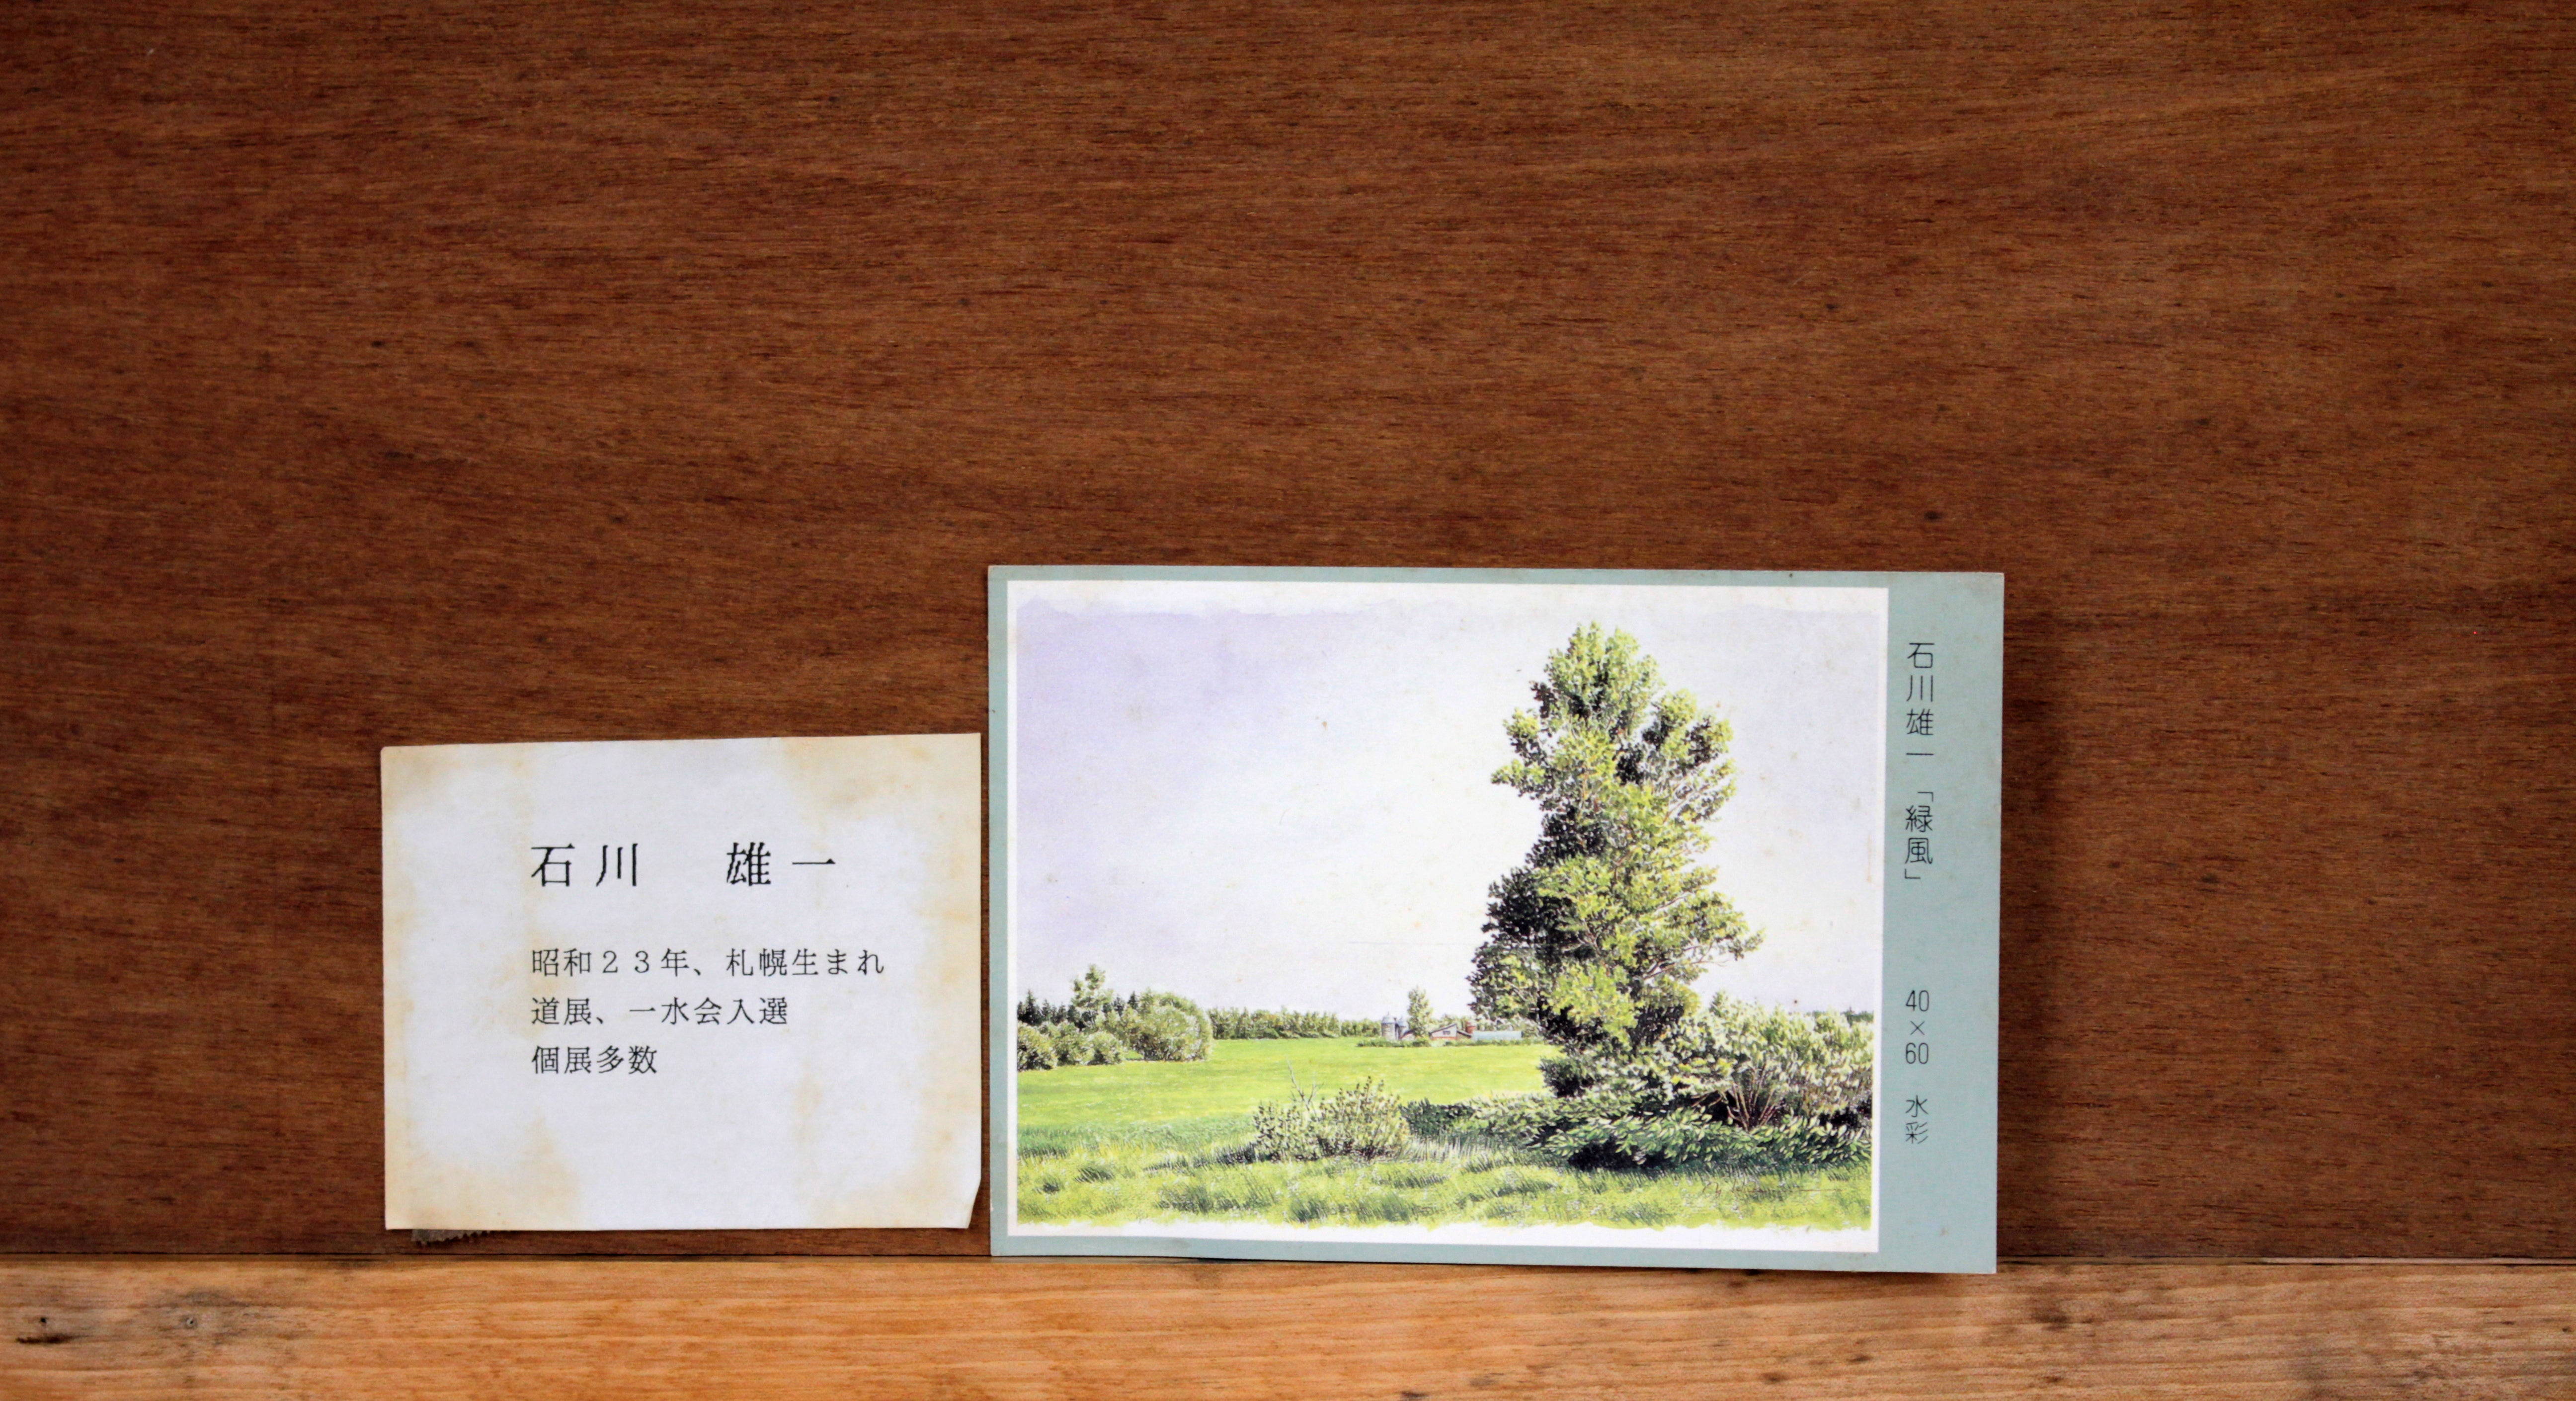 石川雄一『無題』水彩画【真作保証】 絵画385×565cm作品サイズ